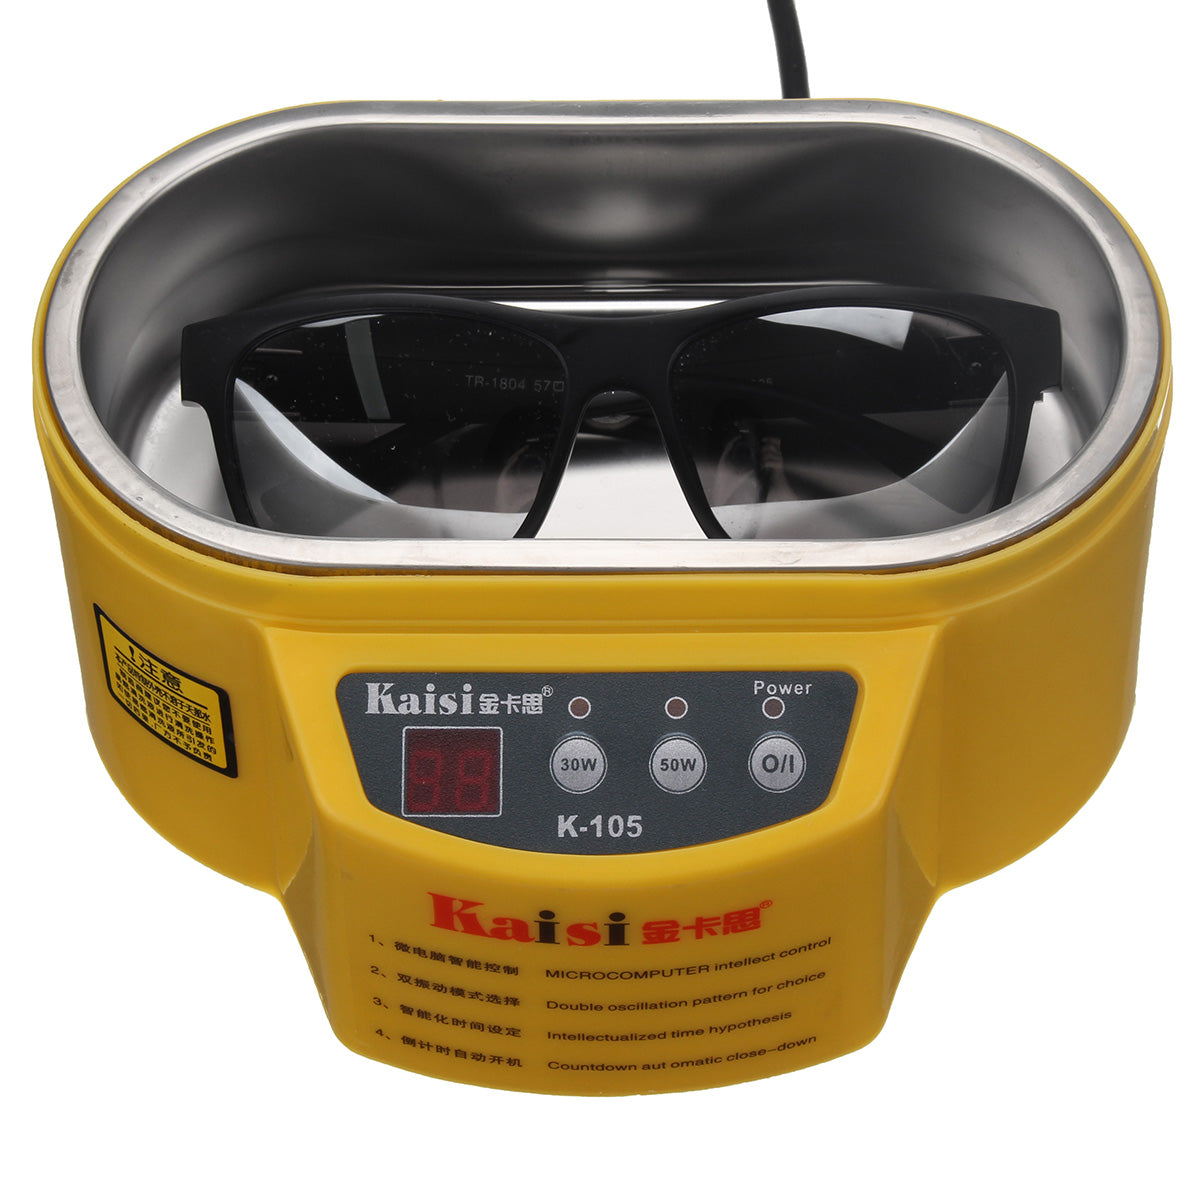 30-50W Mini Ultrasonic Cleaner for Jewelry Glasses Circuit Board Watch CD Lens